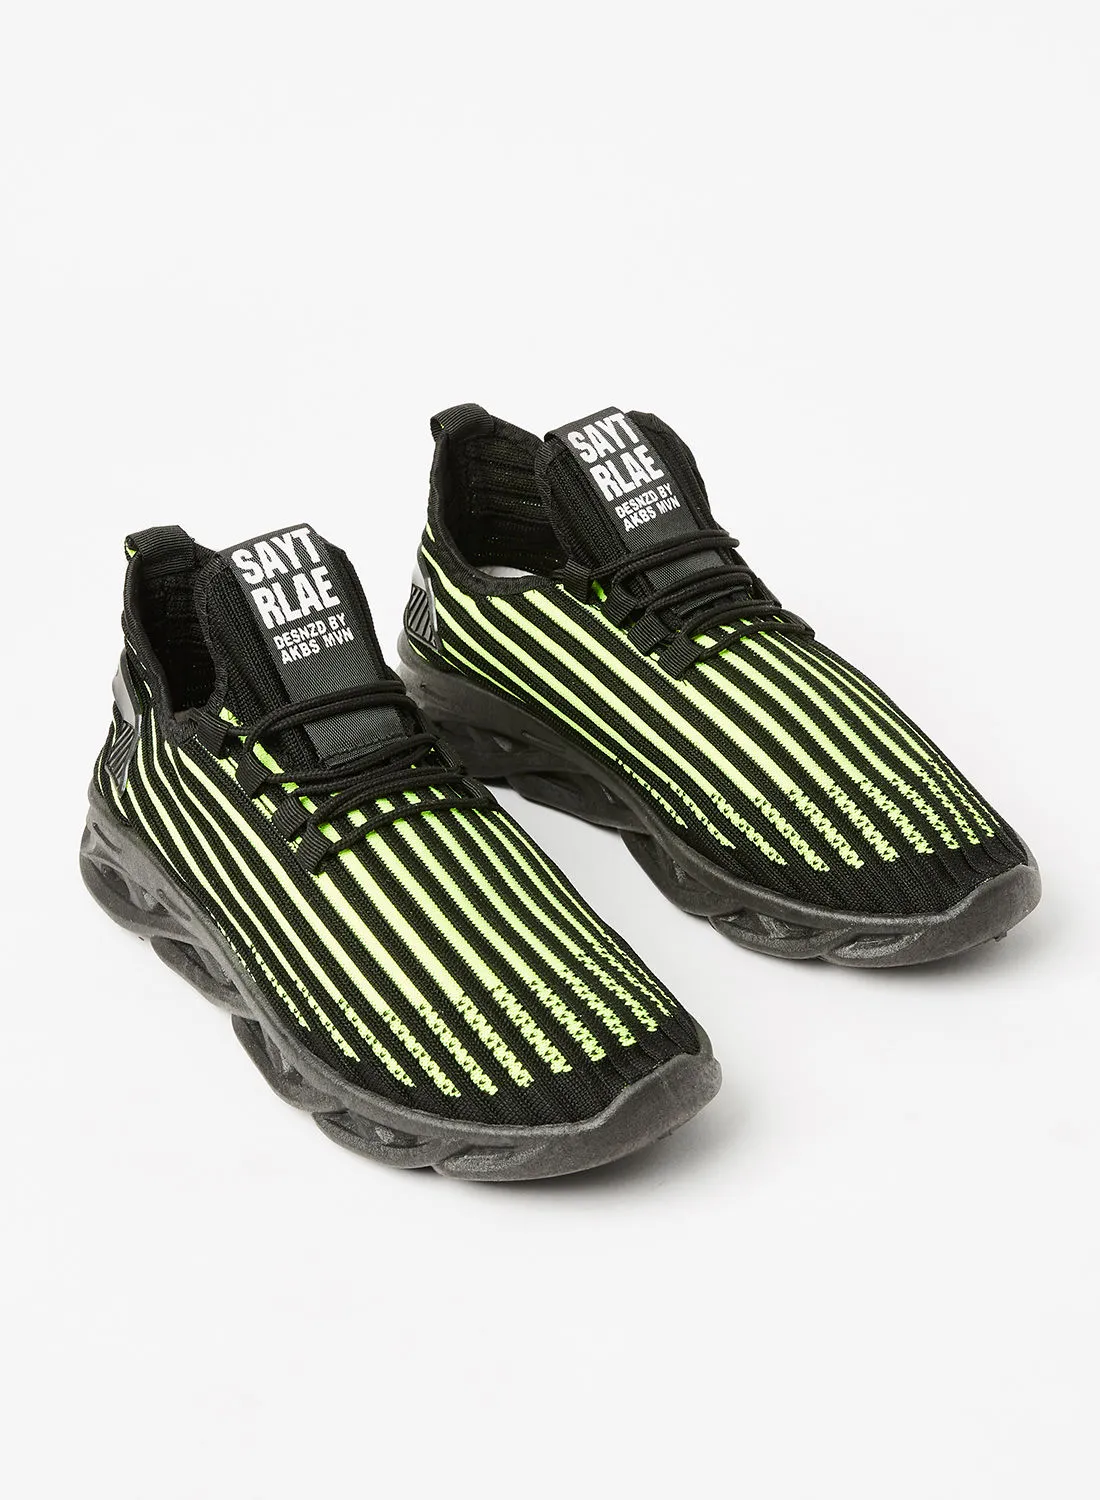 Revs Men's Striped Low Top Sneakers Black/Green